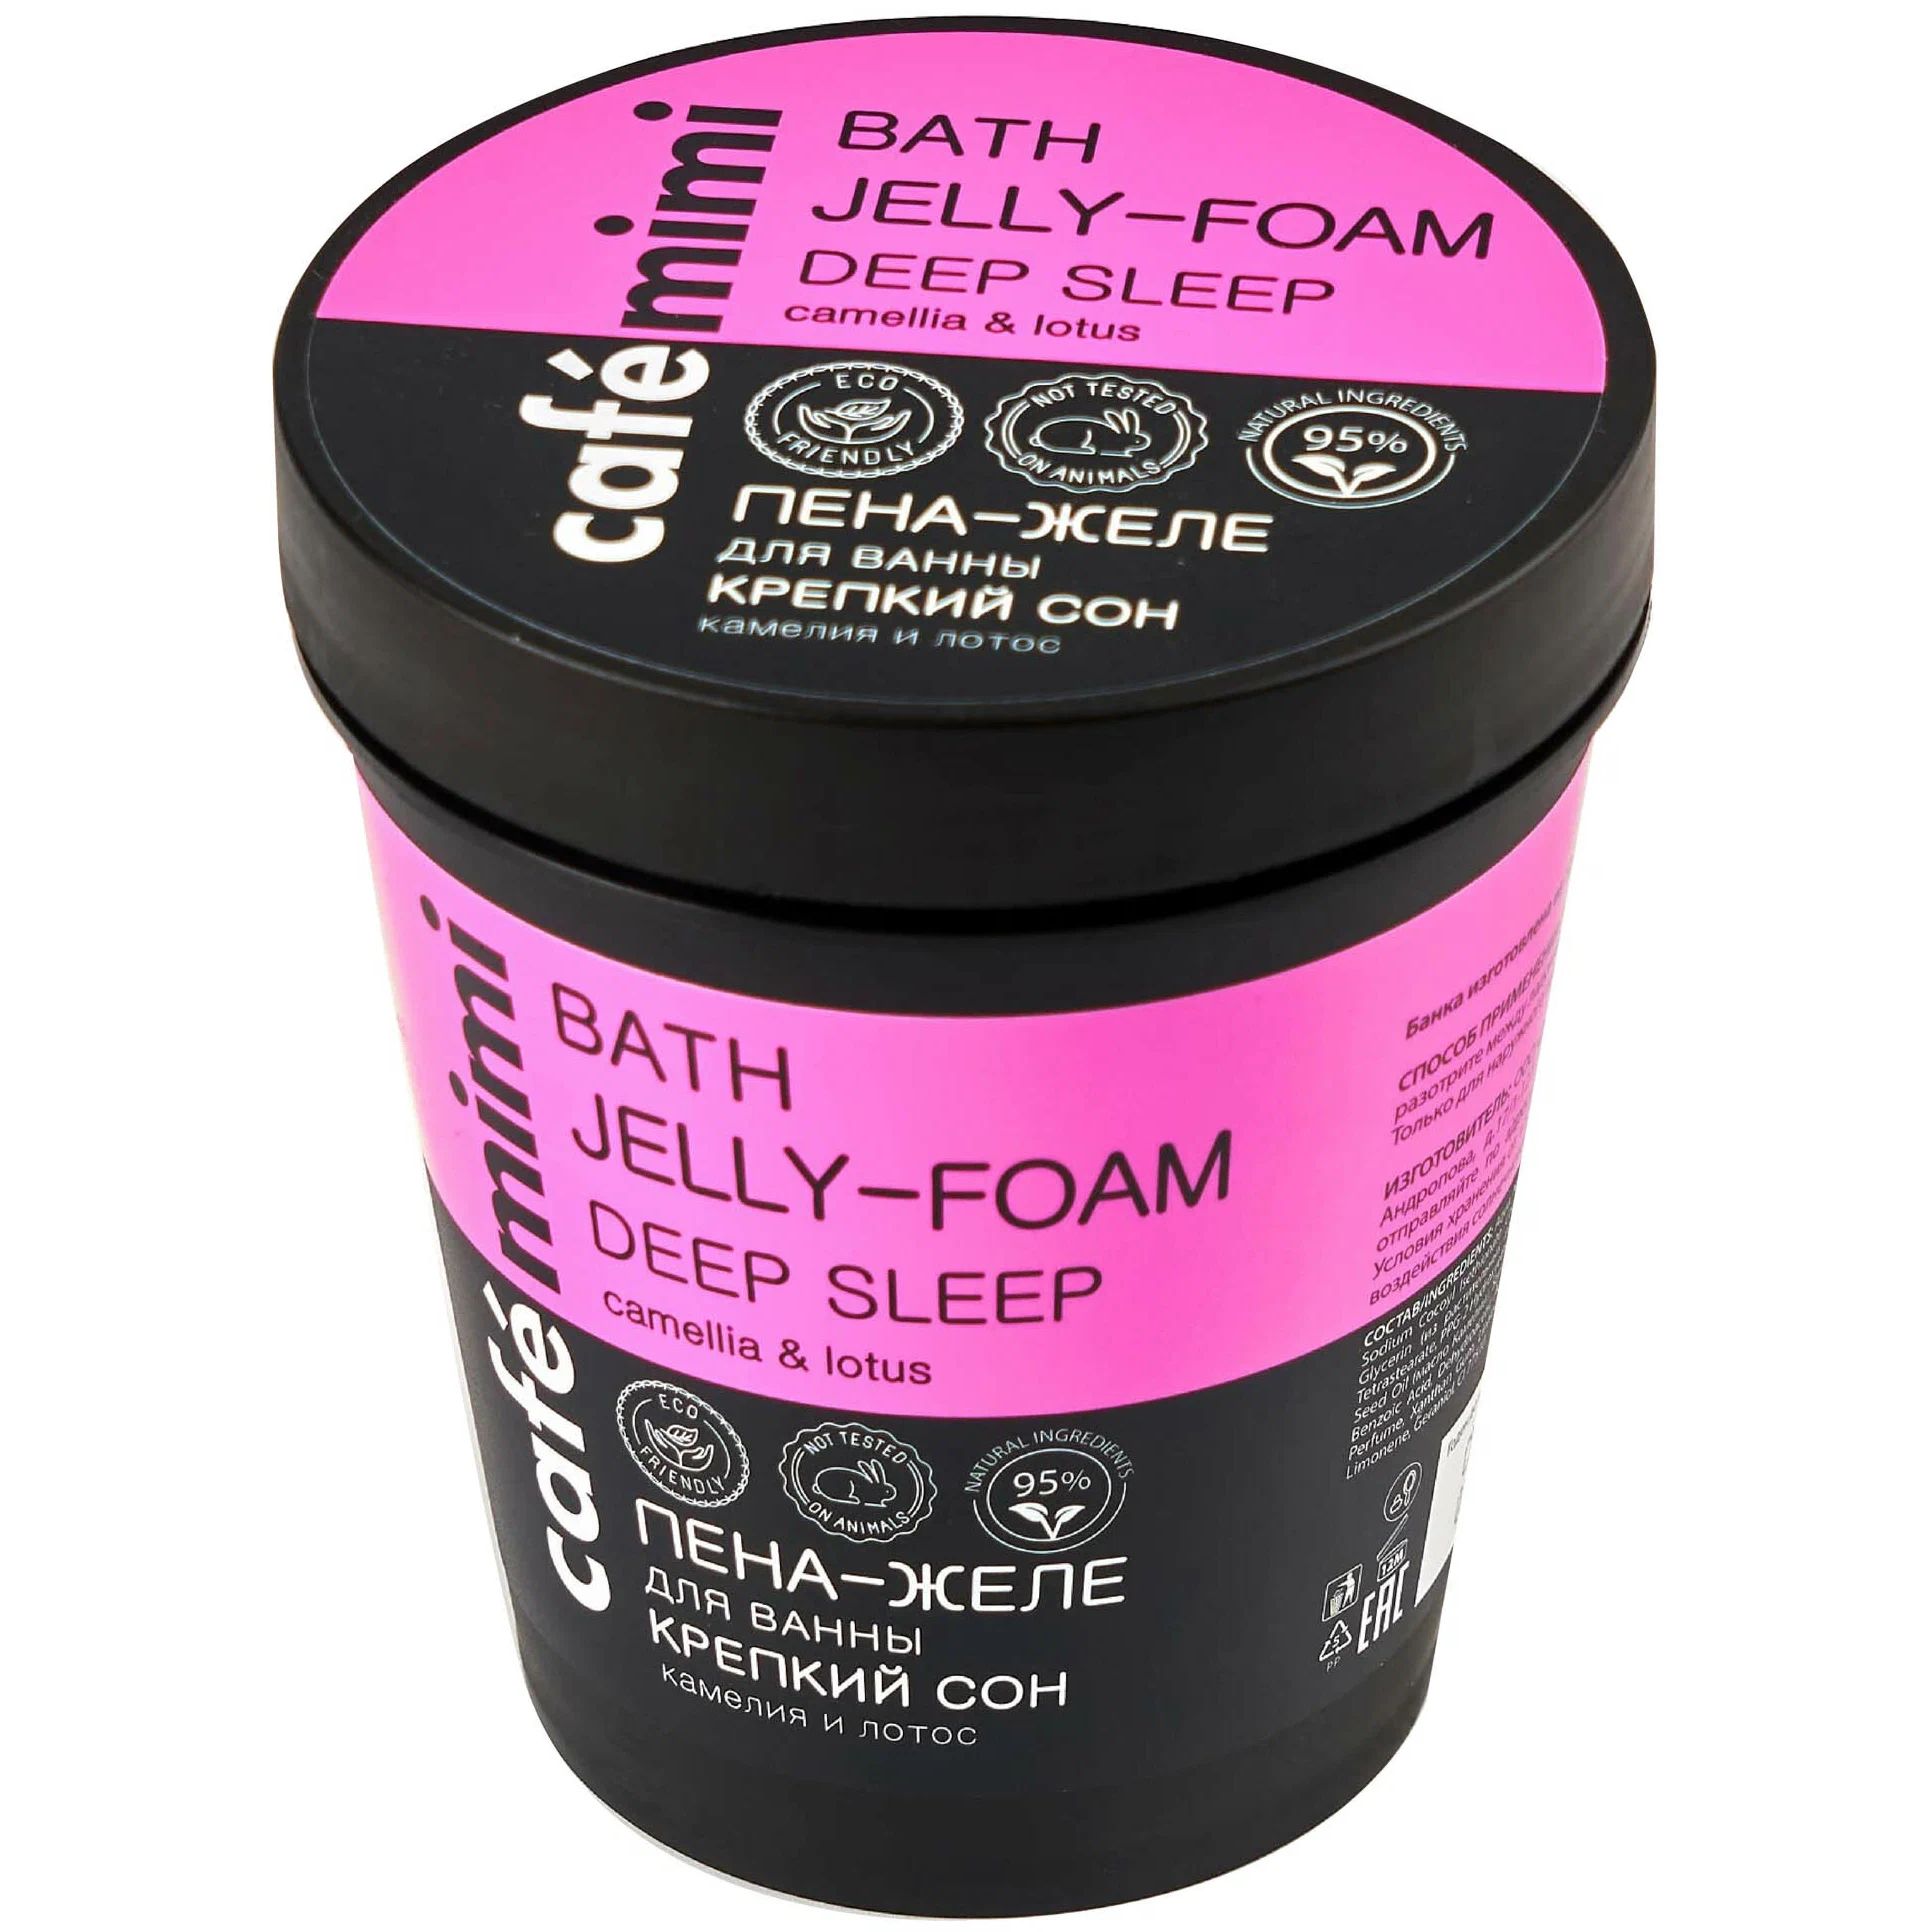 Пена-желе для ванны Cafe Mimi Bath Jelly-Foam Deep Sleep Крепкий сон релакс-эффект, 220 мл perlier пена для ванны vetiver foam bath